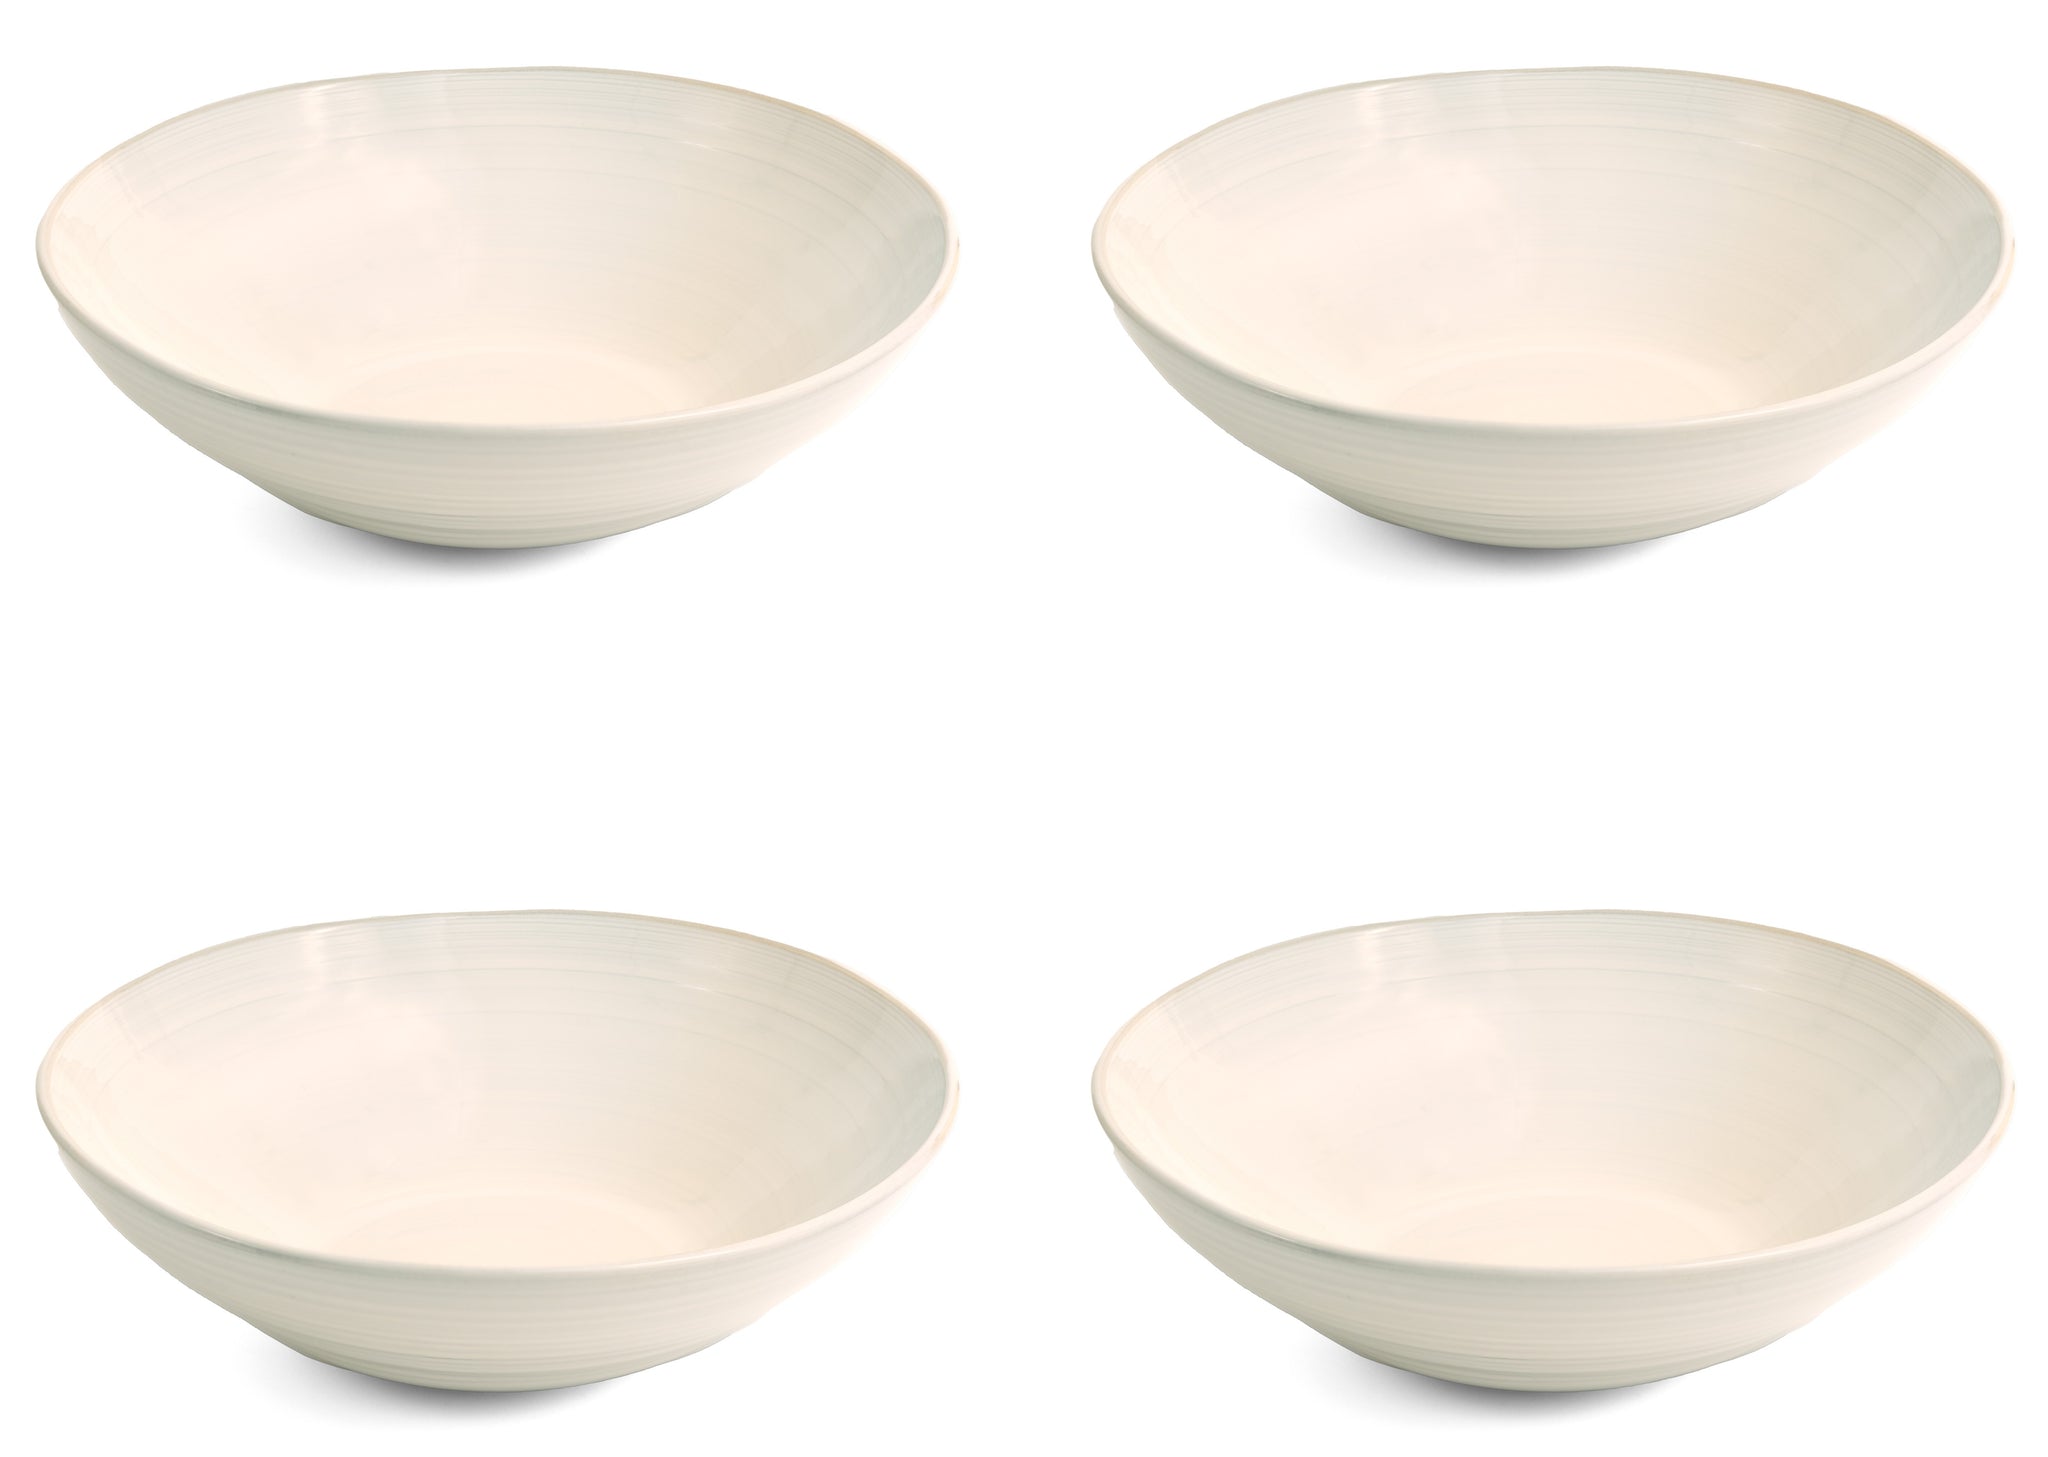 Neree 16pcs Double Bowl Dinnerware Set - Modern Country Style Reactive Glaze